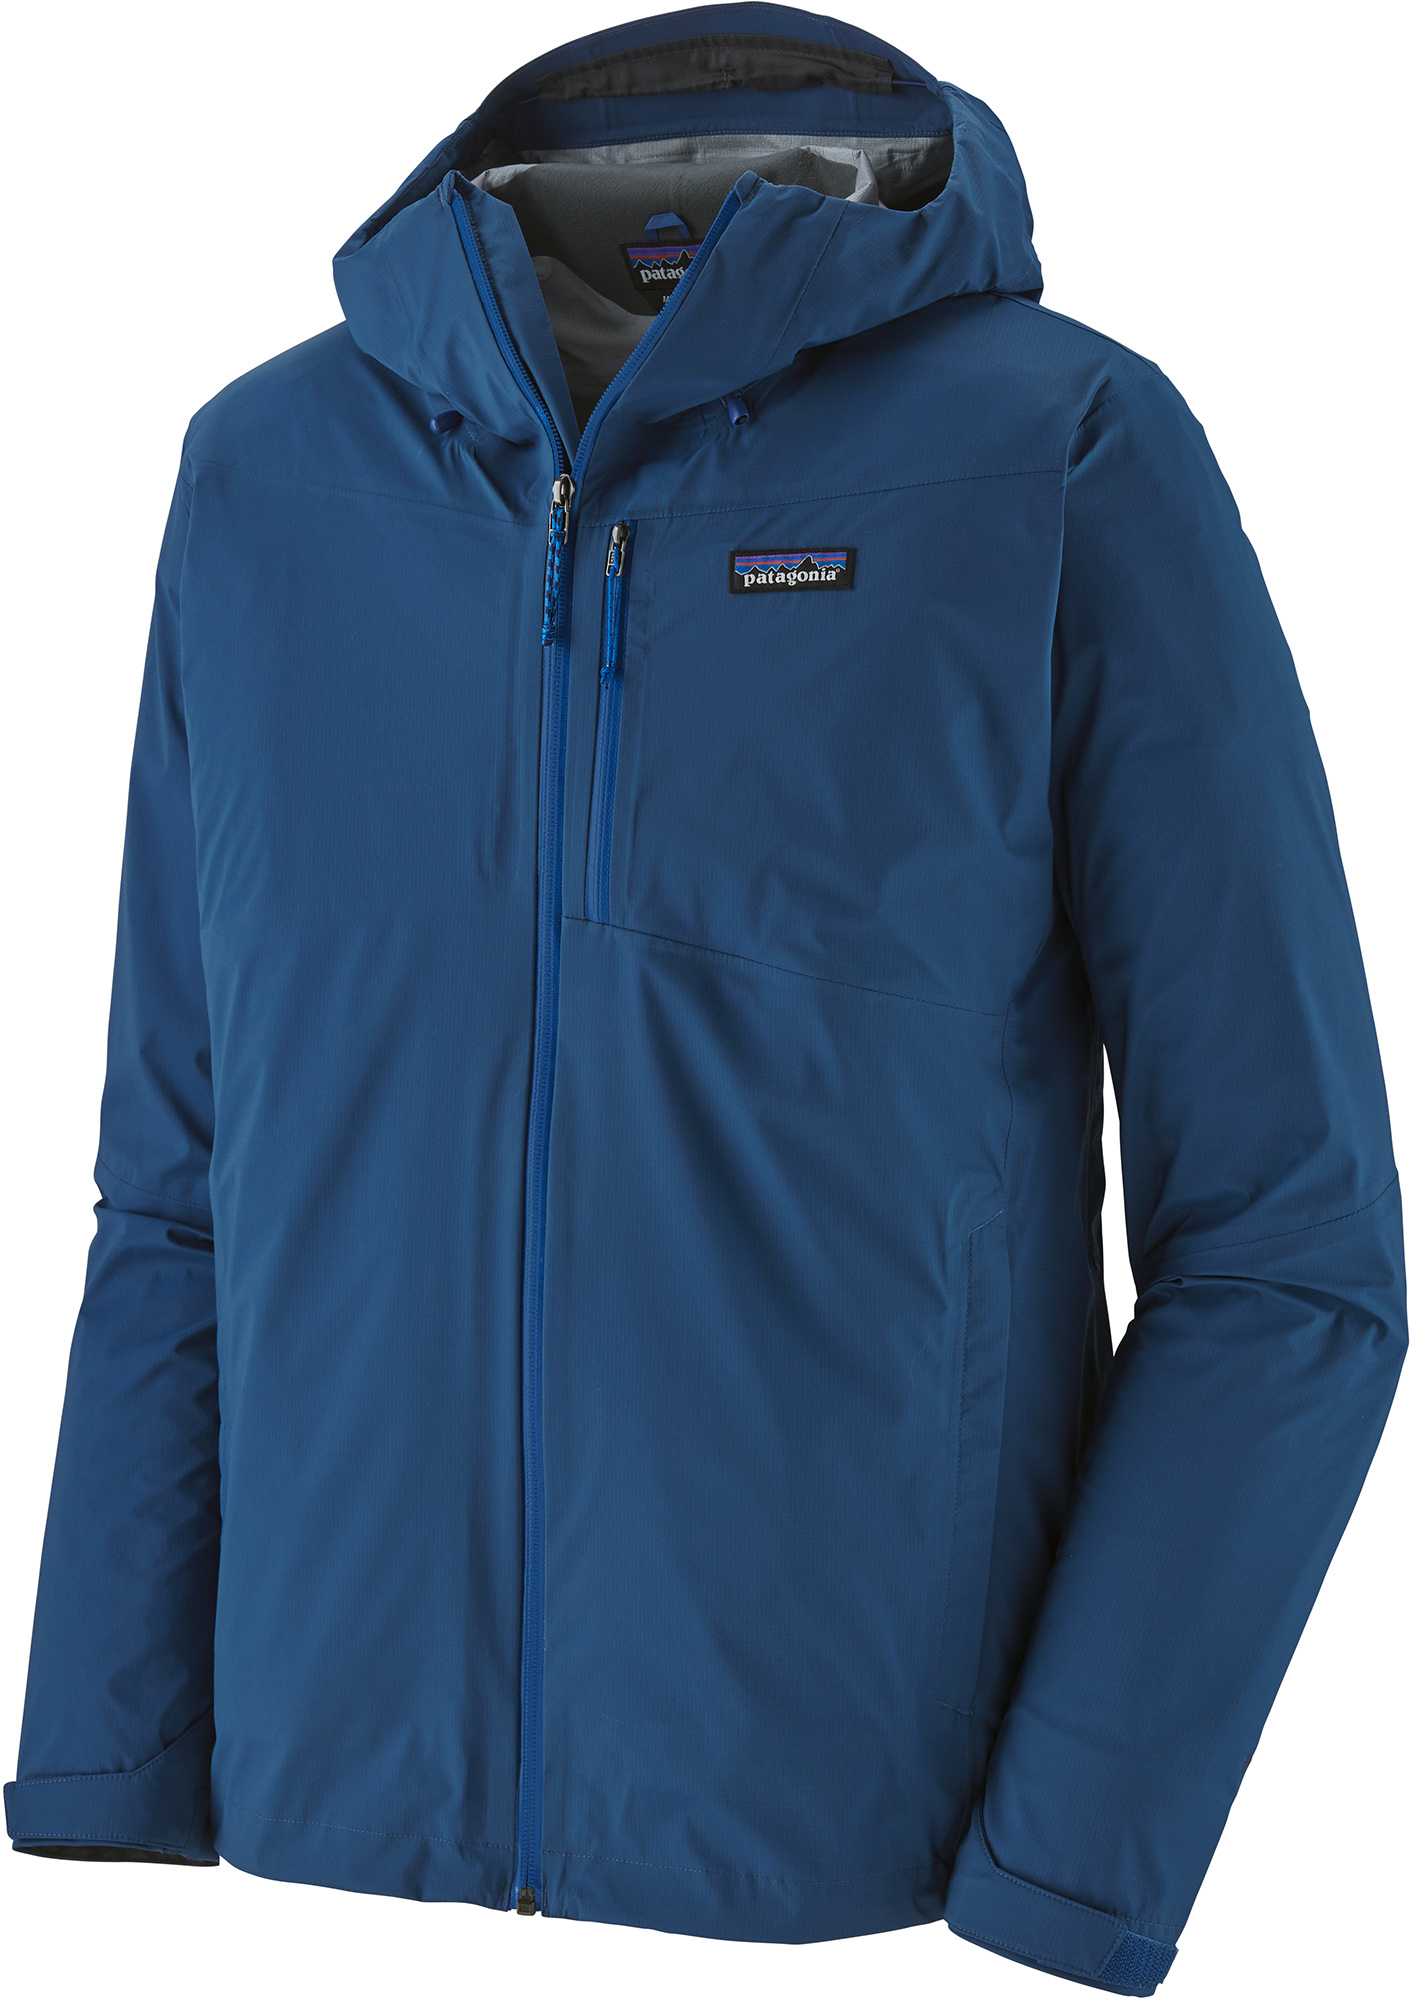 Patagonia M's Rainshadow Jacket - Superior Blue - Medium